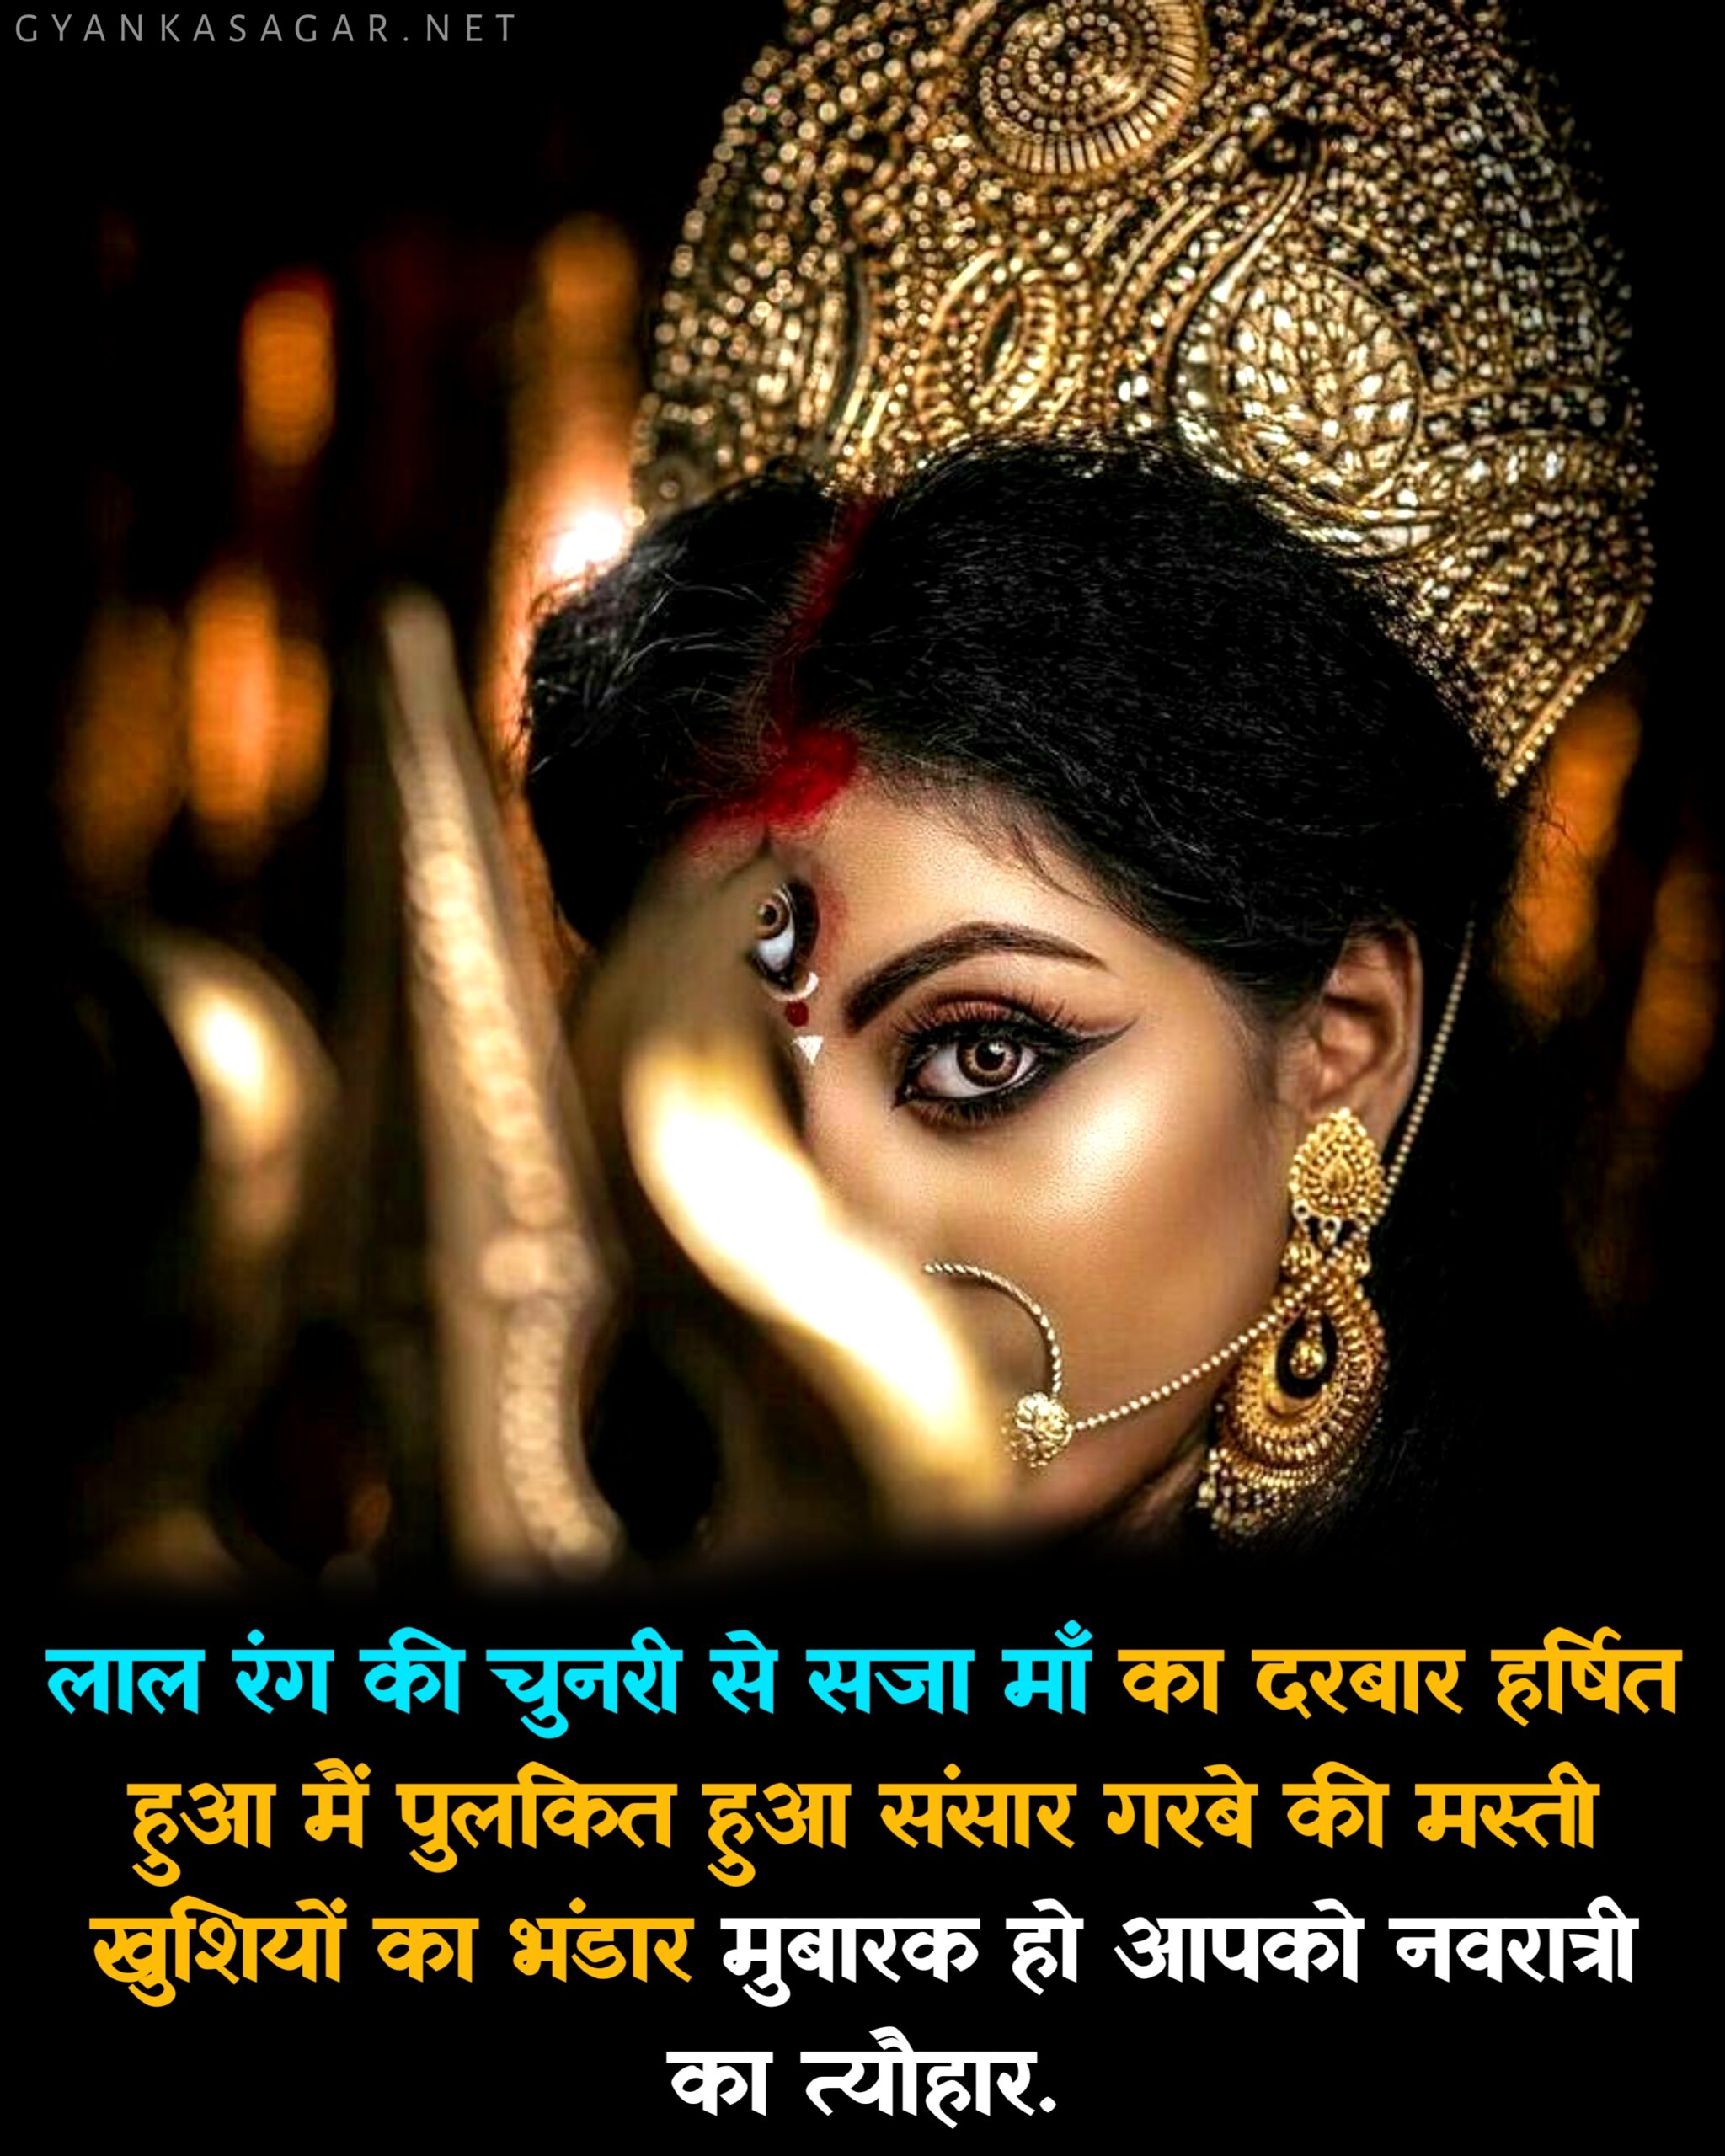 Motivational Maa Durga quotes in Hindi | मोटिवेशनल मा दुर्गा कोट्स इन हिंदी 2023,female empowerment maa durga quotes,maa durga quotes,maa durga quotes in hindi,inspirational maa durga quotes in english